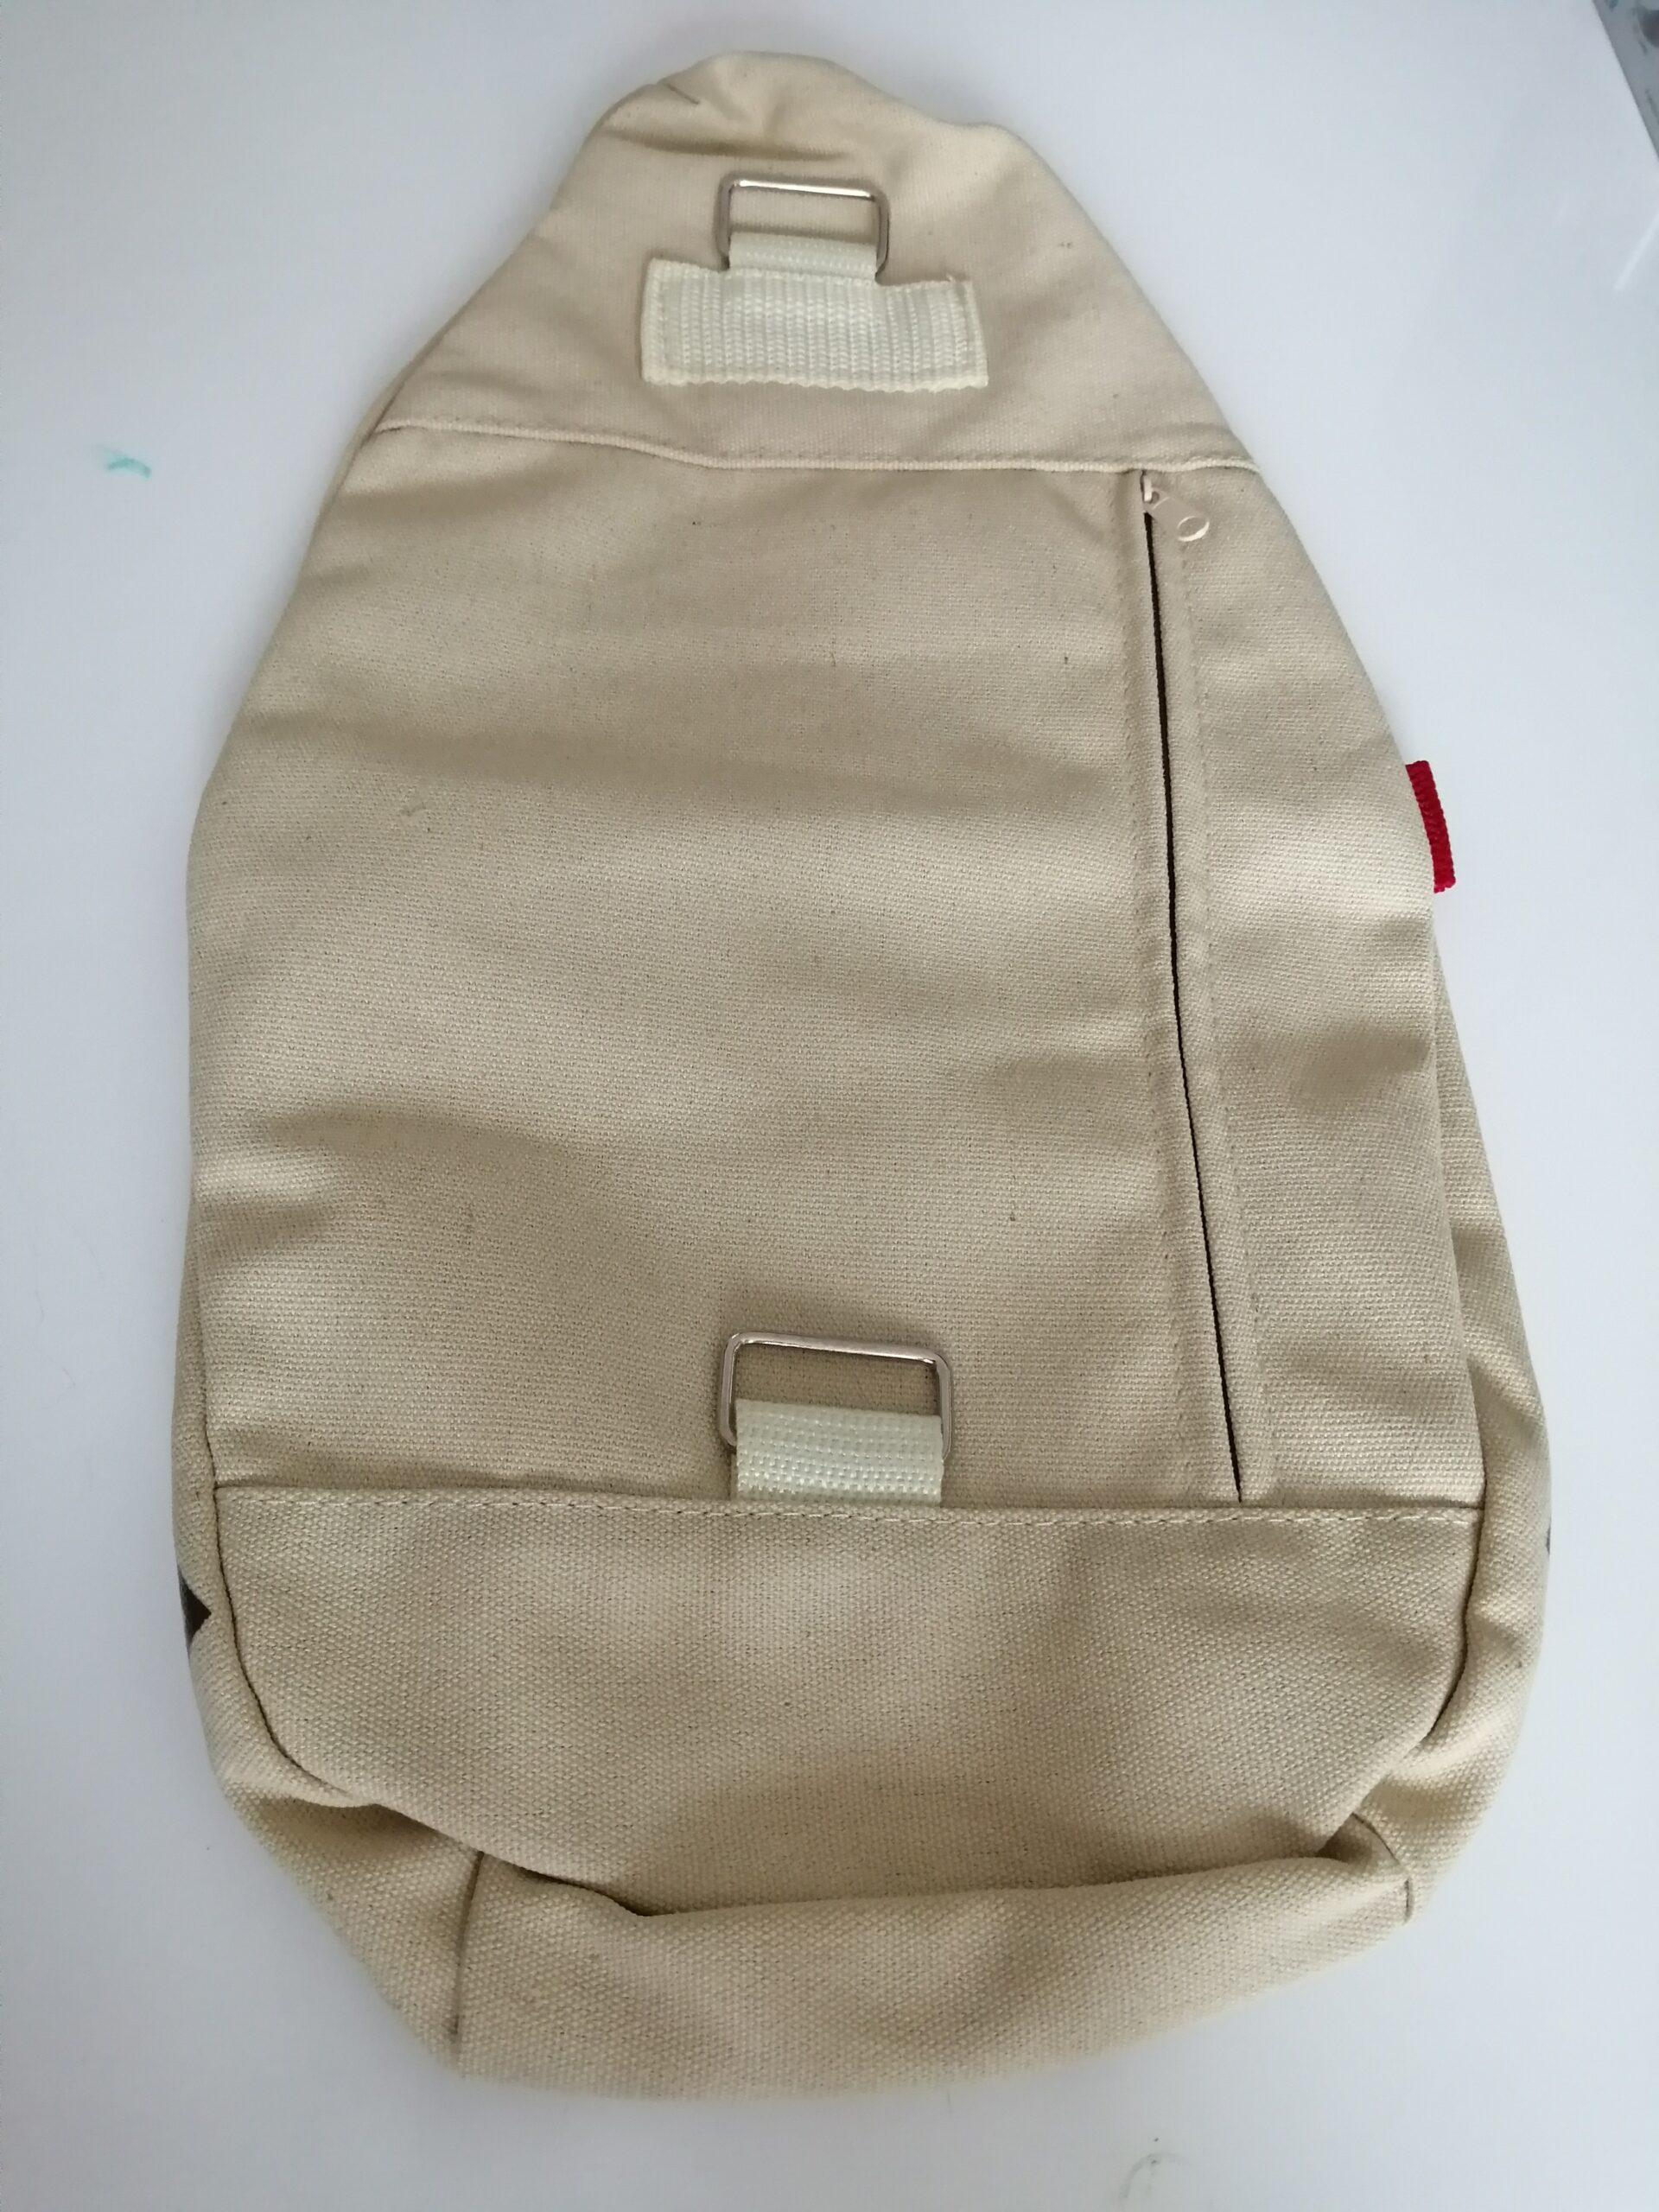 Naruto – Gaara Themed Sand Bag for School and Travel Bags & Backpacks